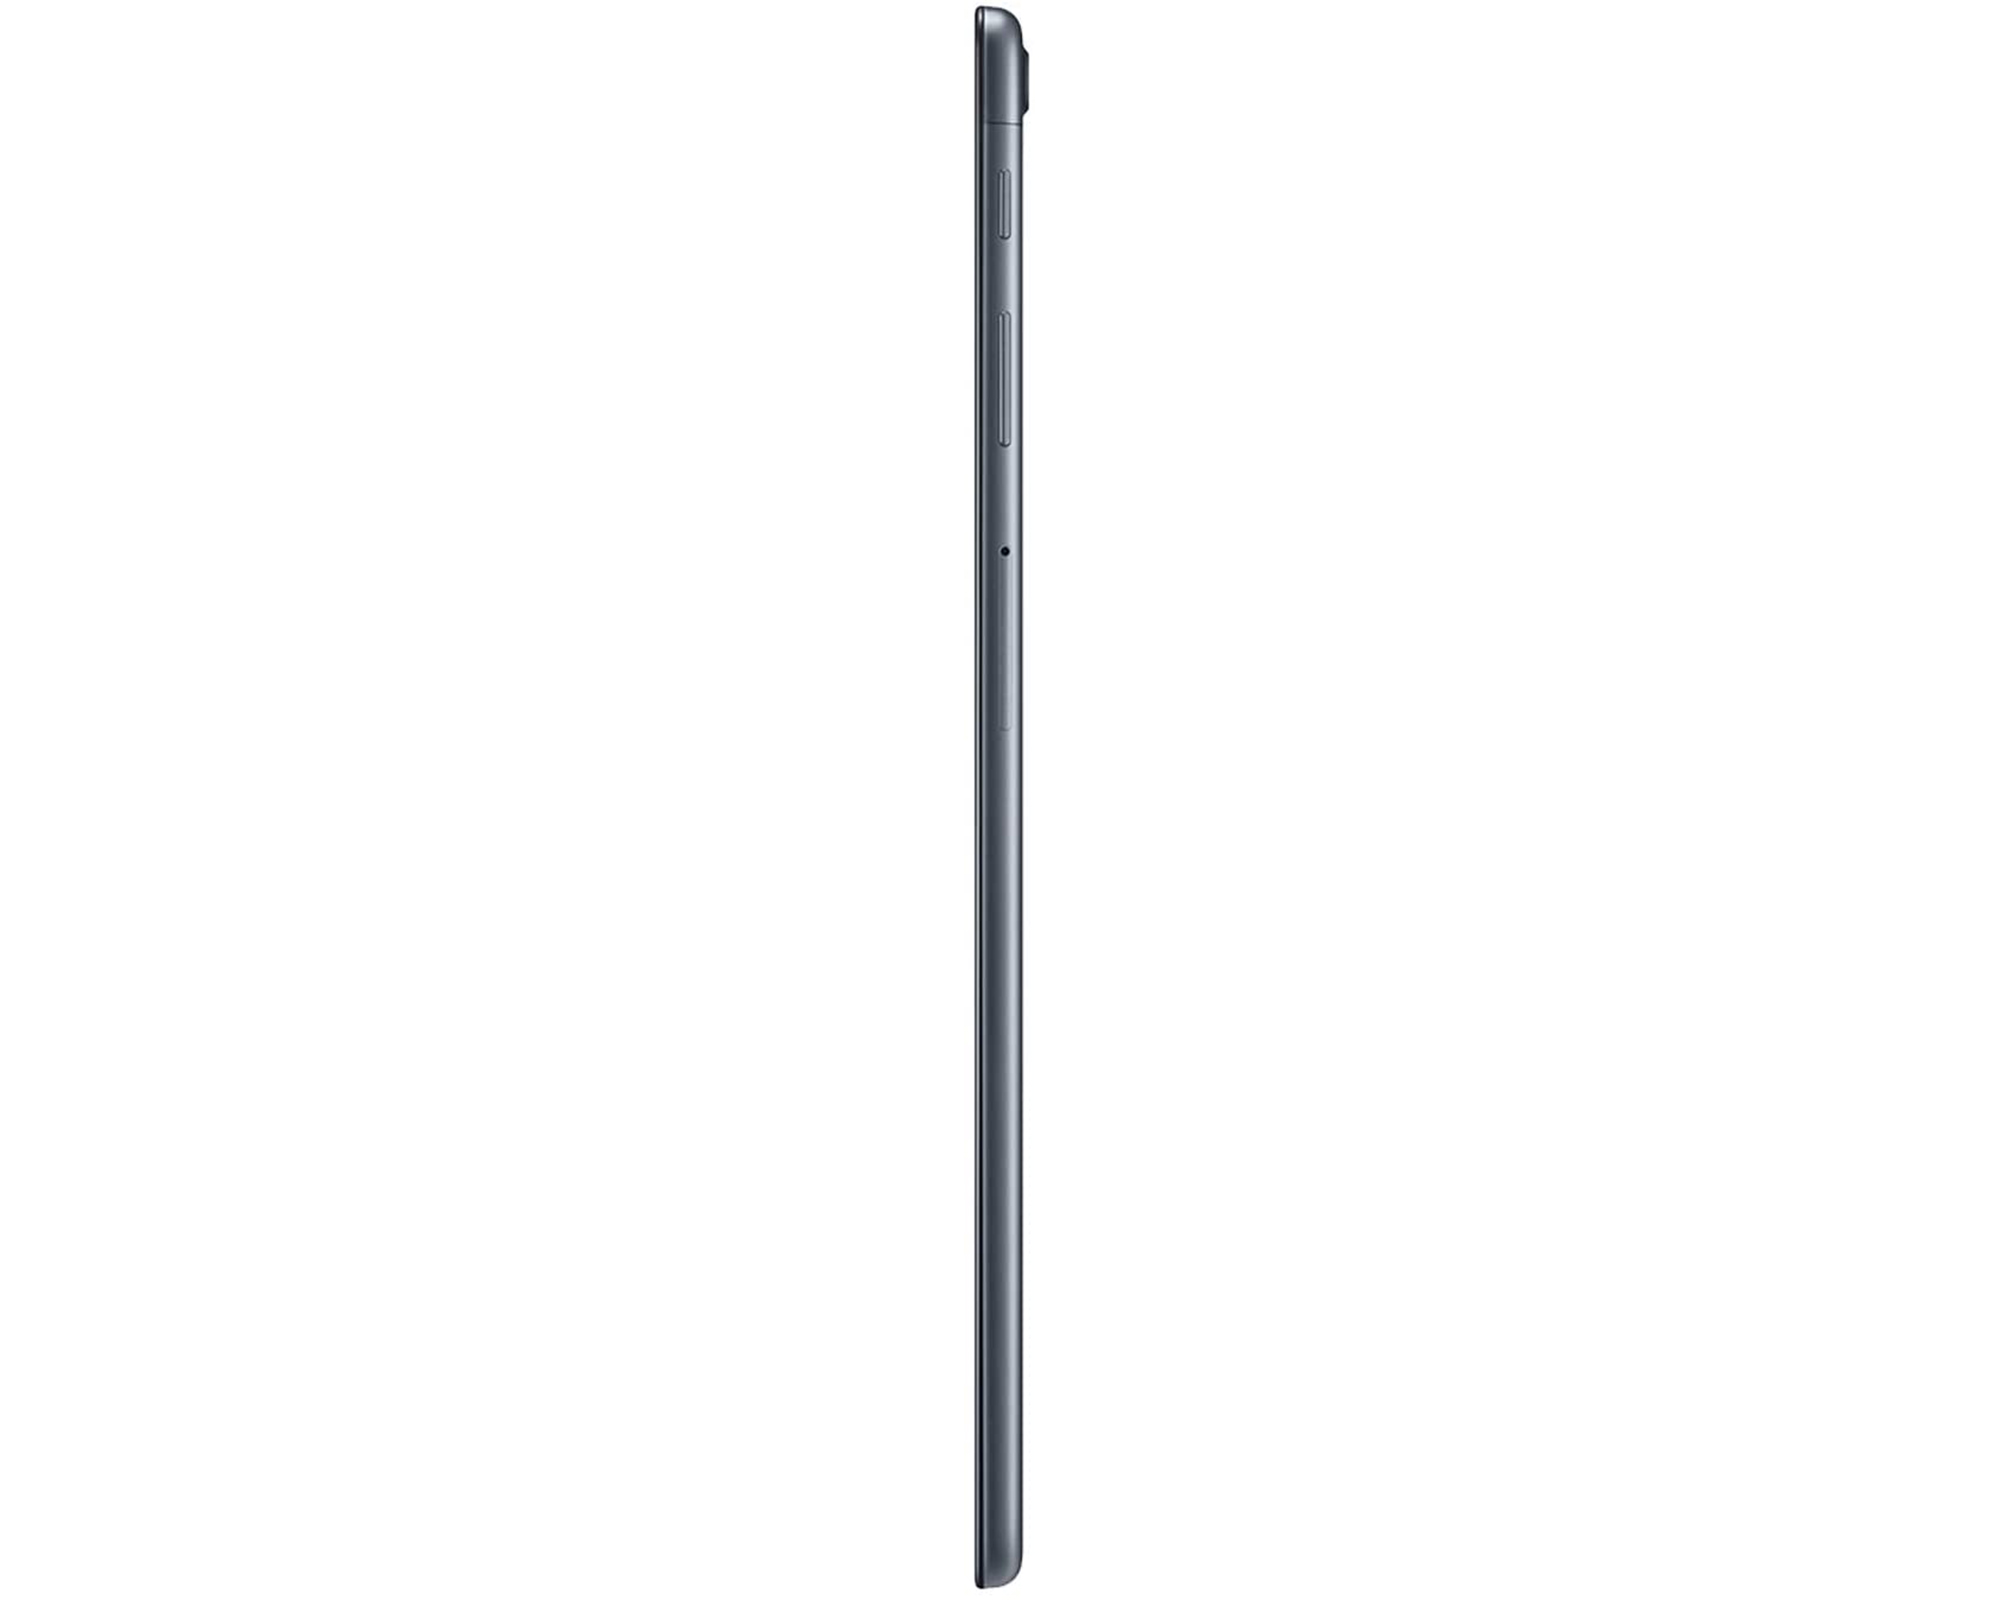 SAMSUNG Galaxy Tab A 10.1" 32GB Tablet, Black - SM-T510NZKAXAR - image 4 of 7